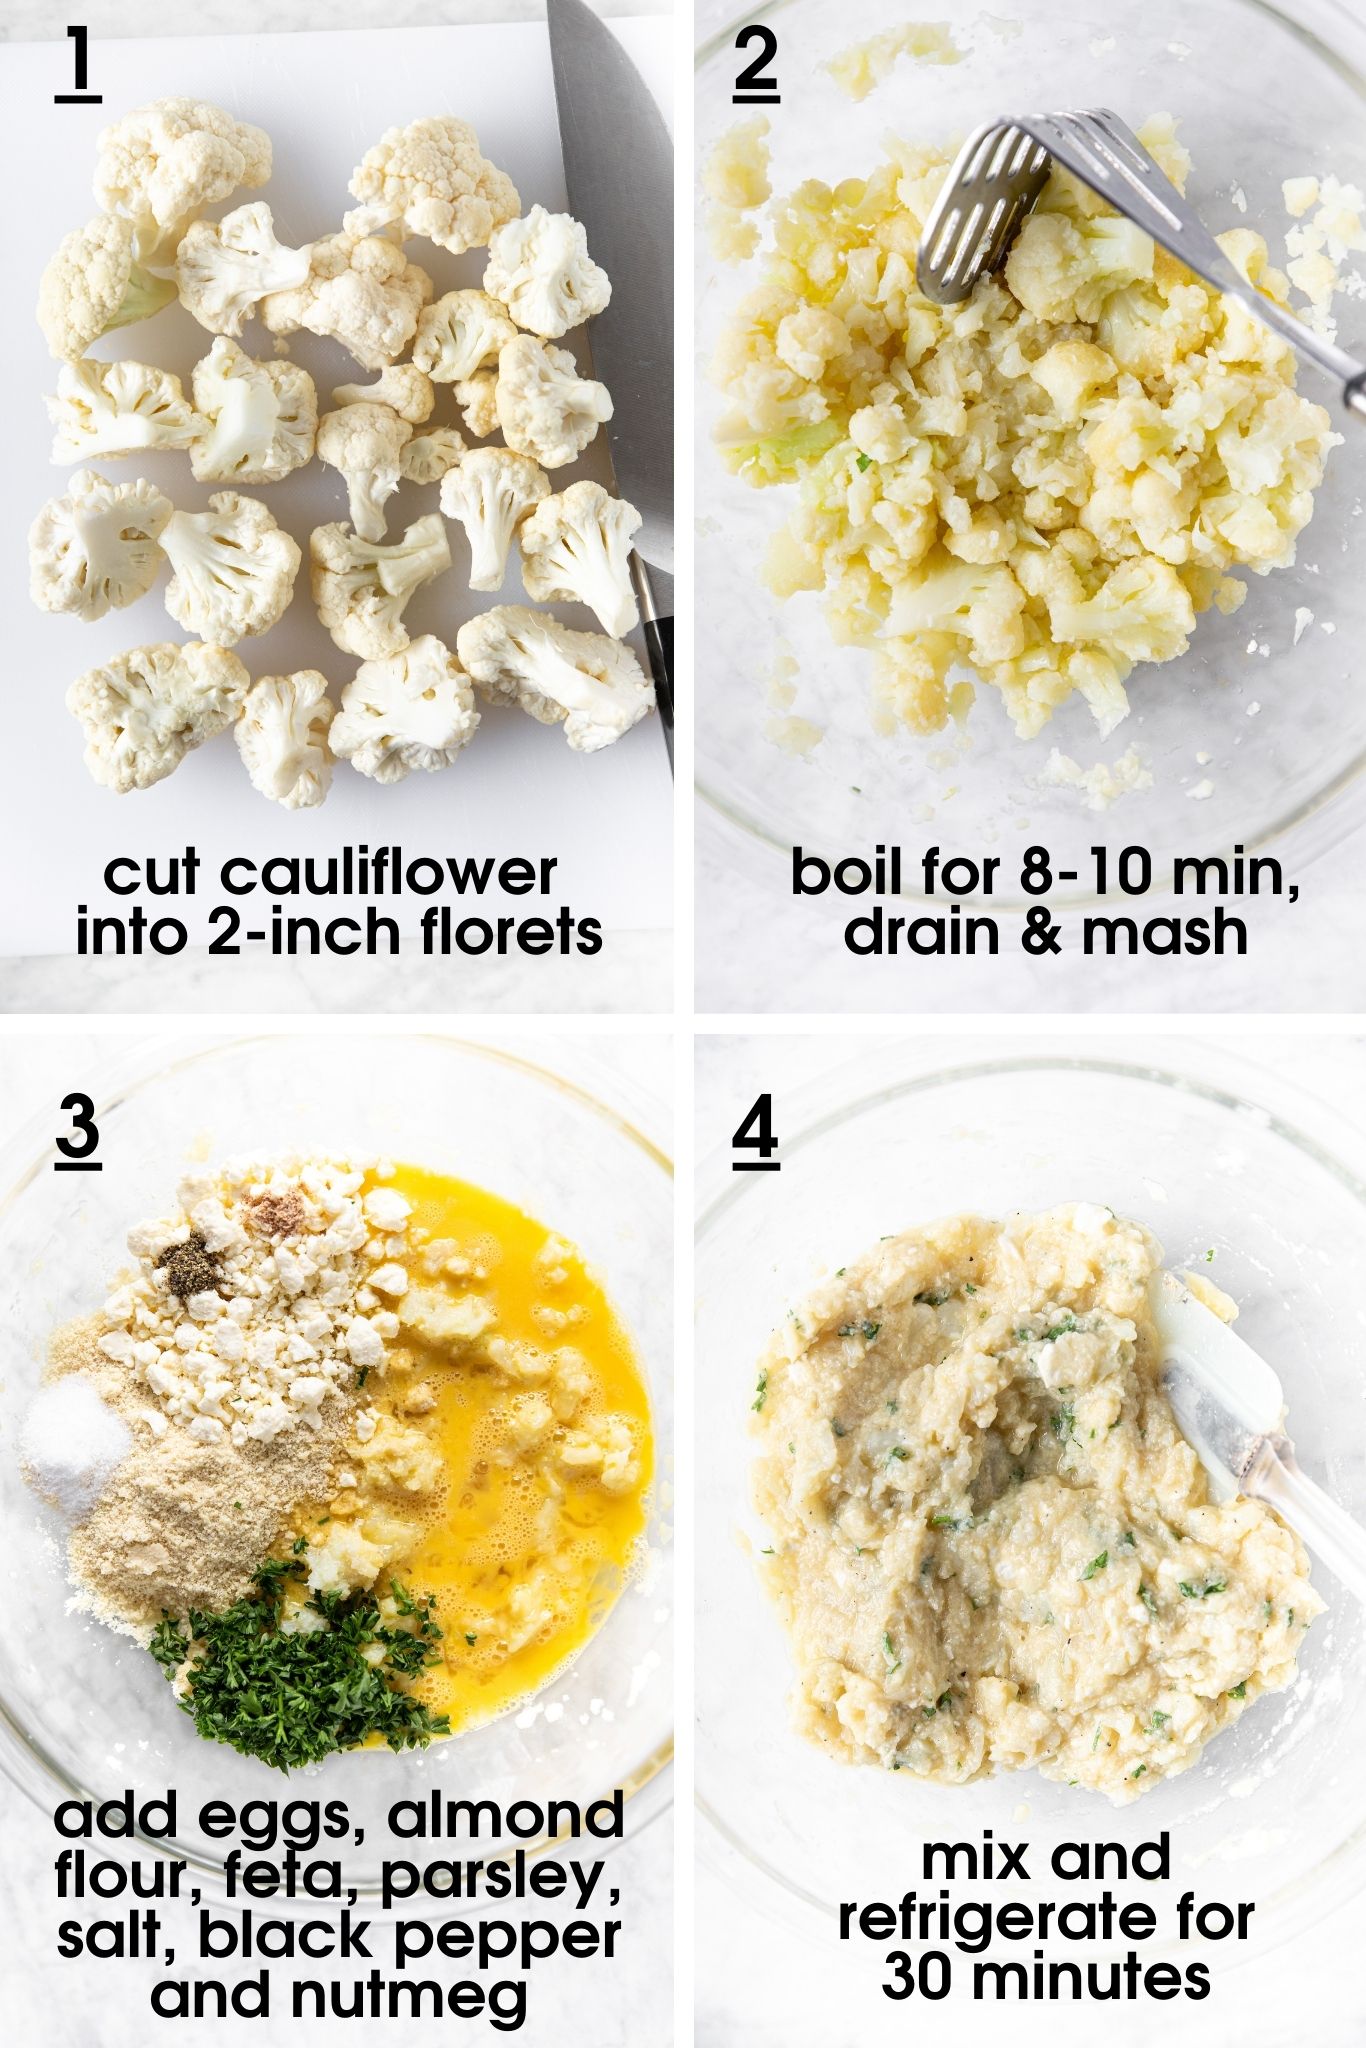 Steps to make GF & Paleo Cauliflower Patties from verygoodcook.com